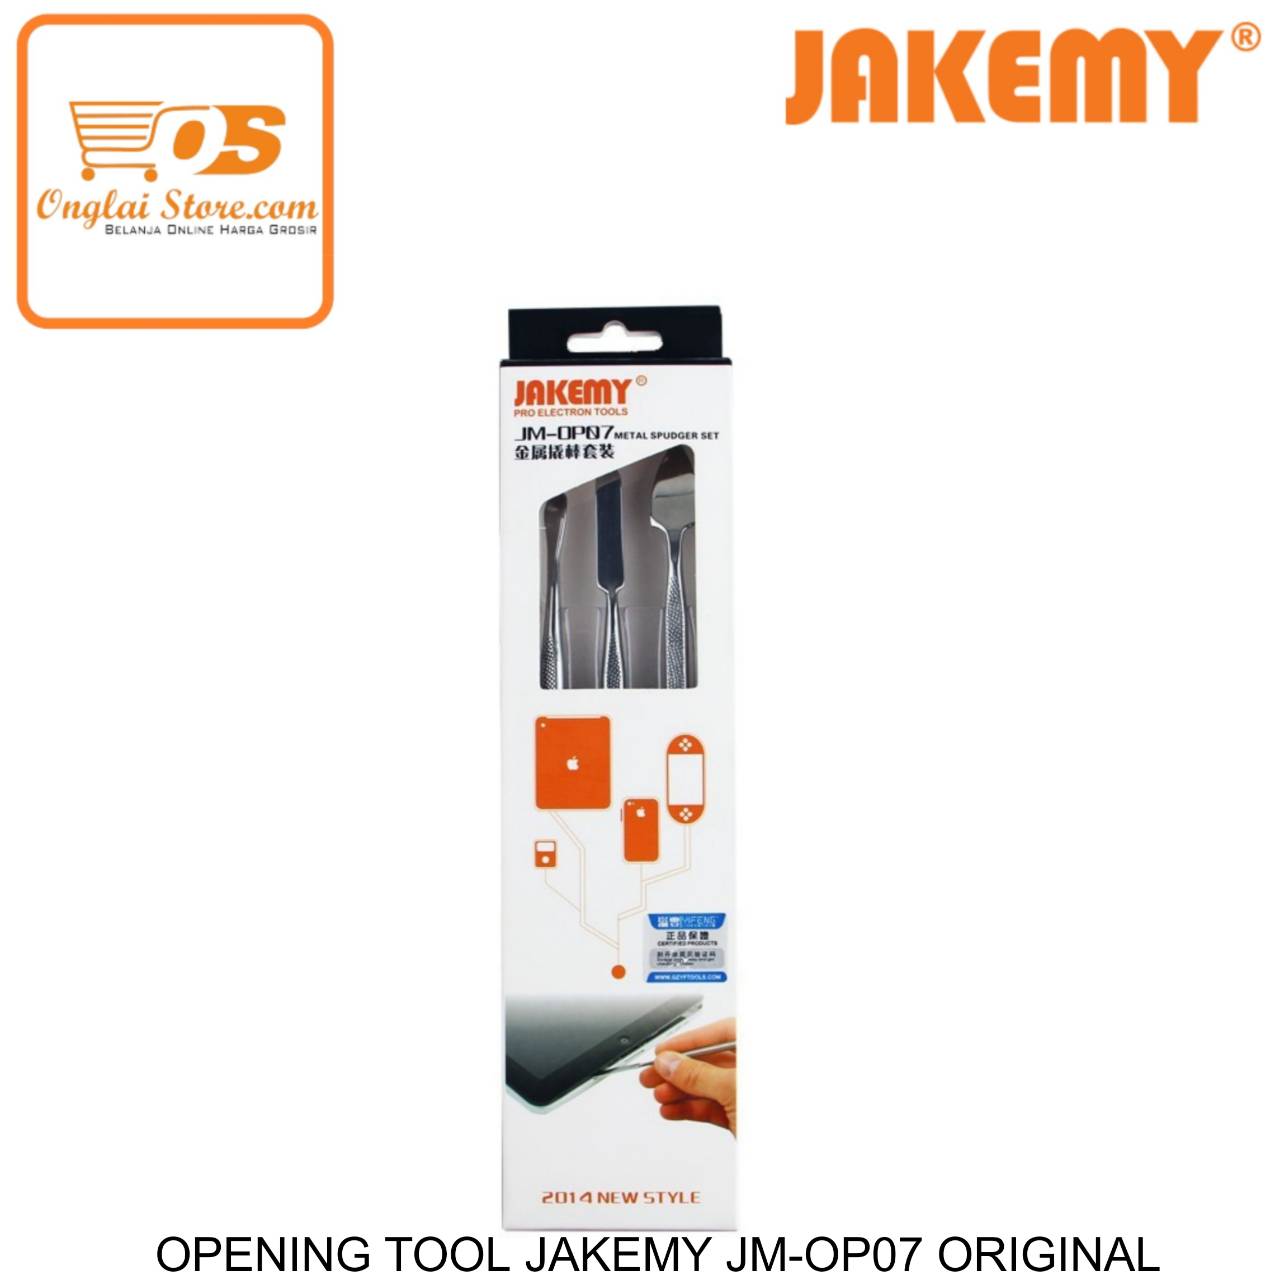 OPENING TOOL JAKEMY JM-OP07 ORIGINAL